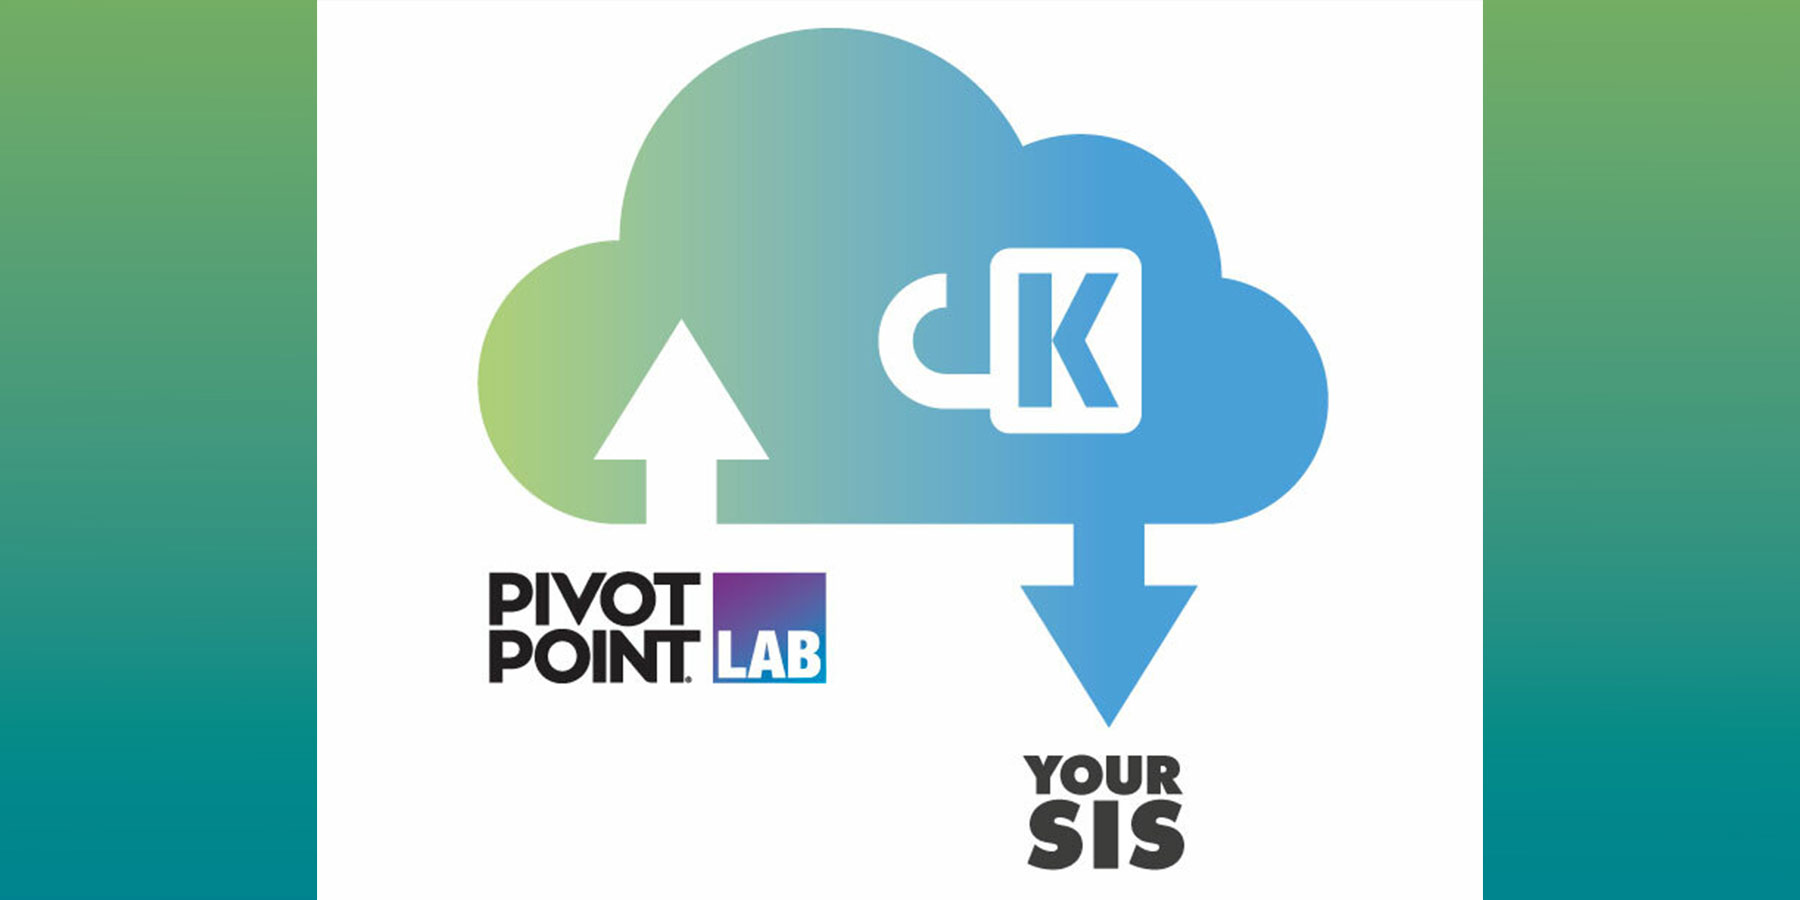 CourseKey and Pivot Point